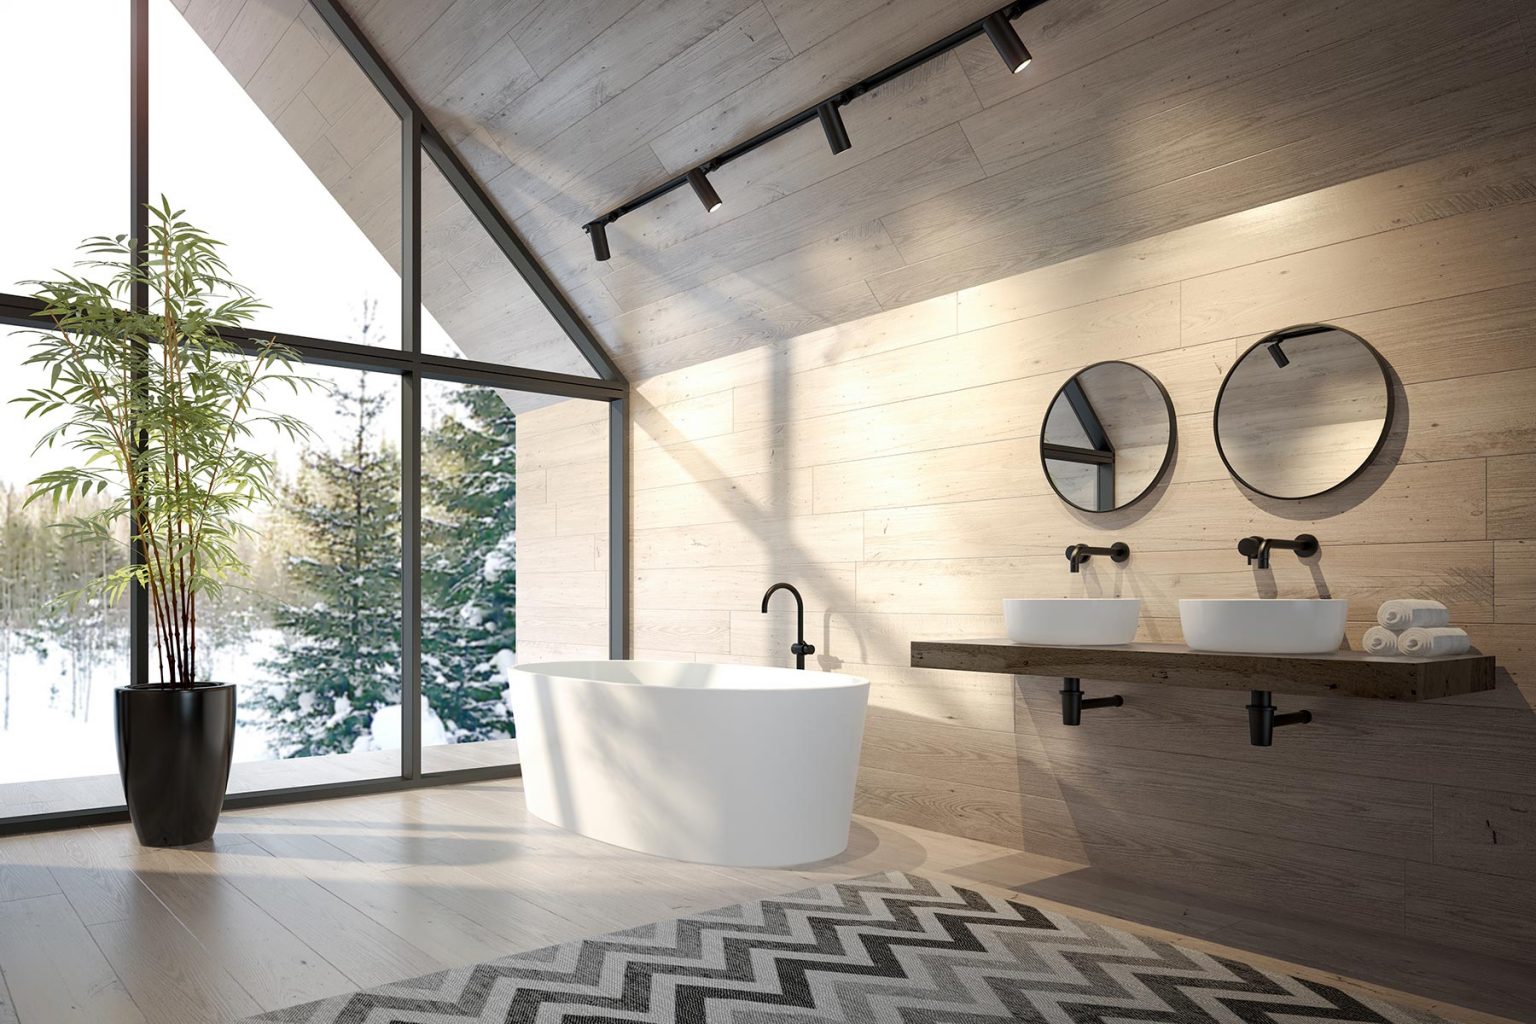 interior-bathroom-of-a-forest-house-3d-rendering-5DZ6ARQ.jpg